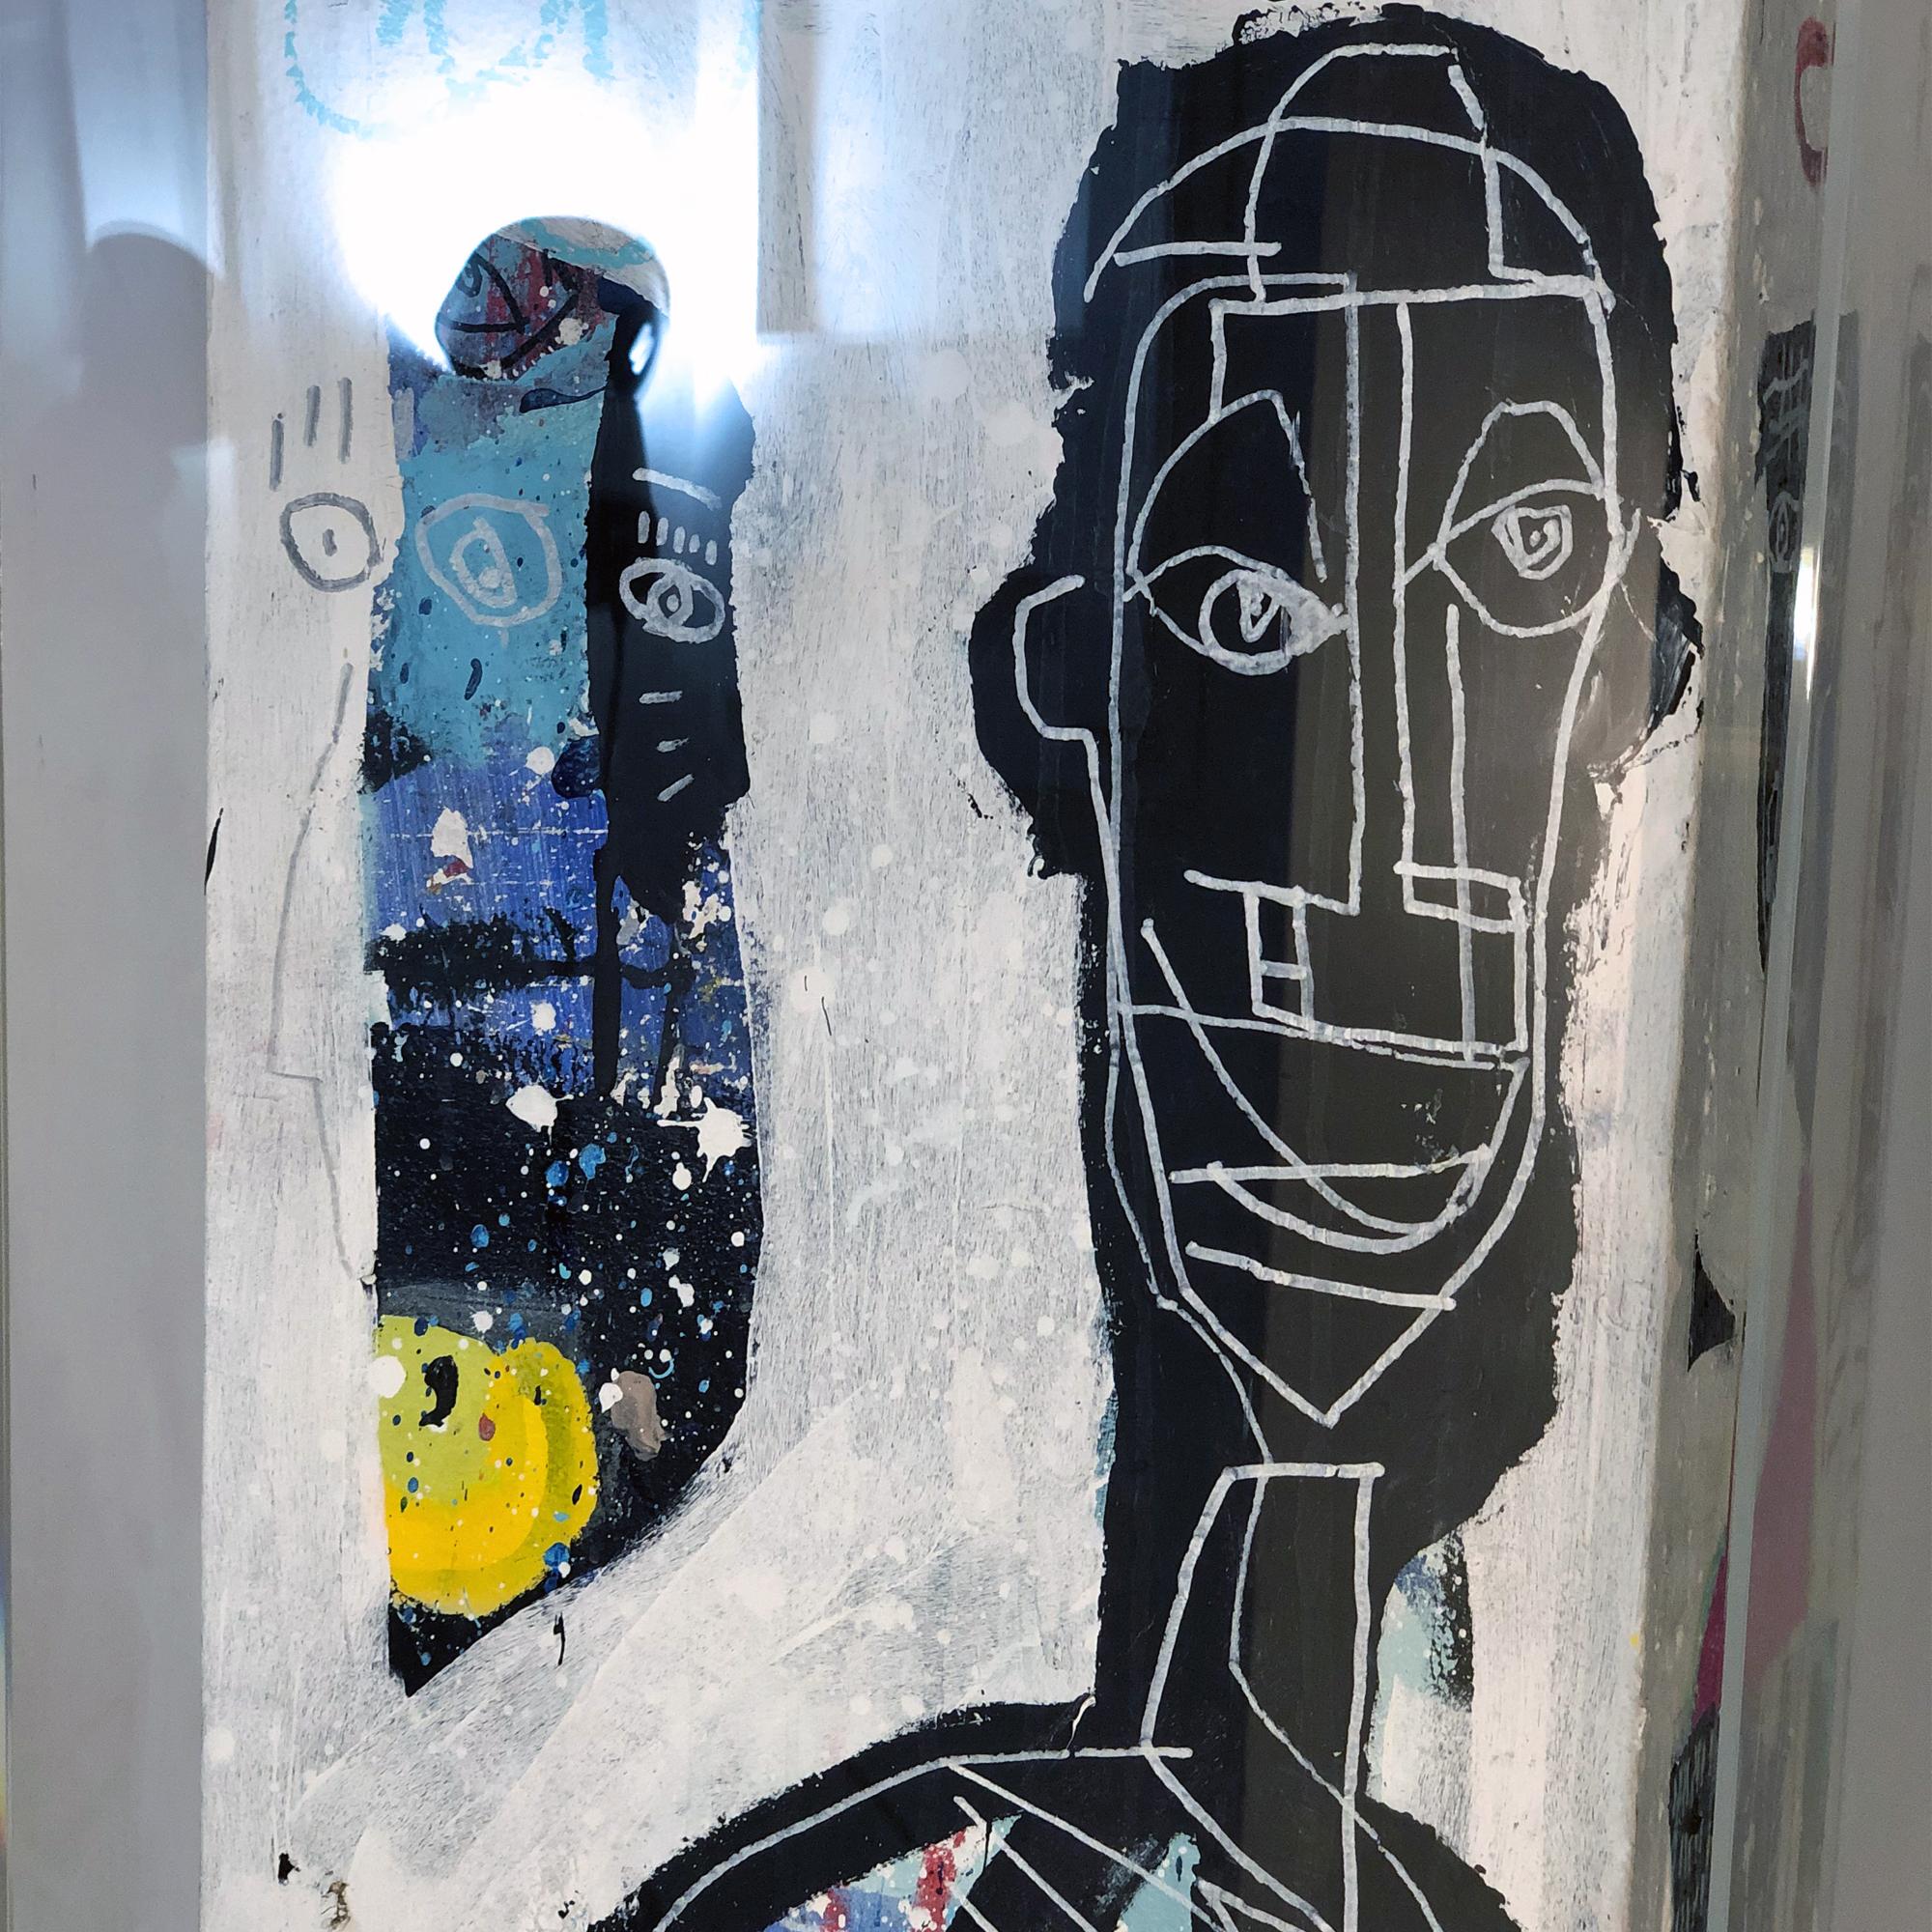 Colonne White, Monsieur Jamin, 2018, Acrylic Paint on Wood under Glass 8